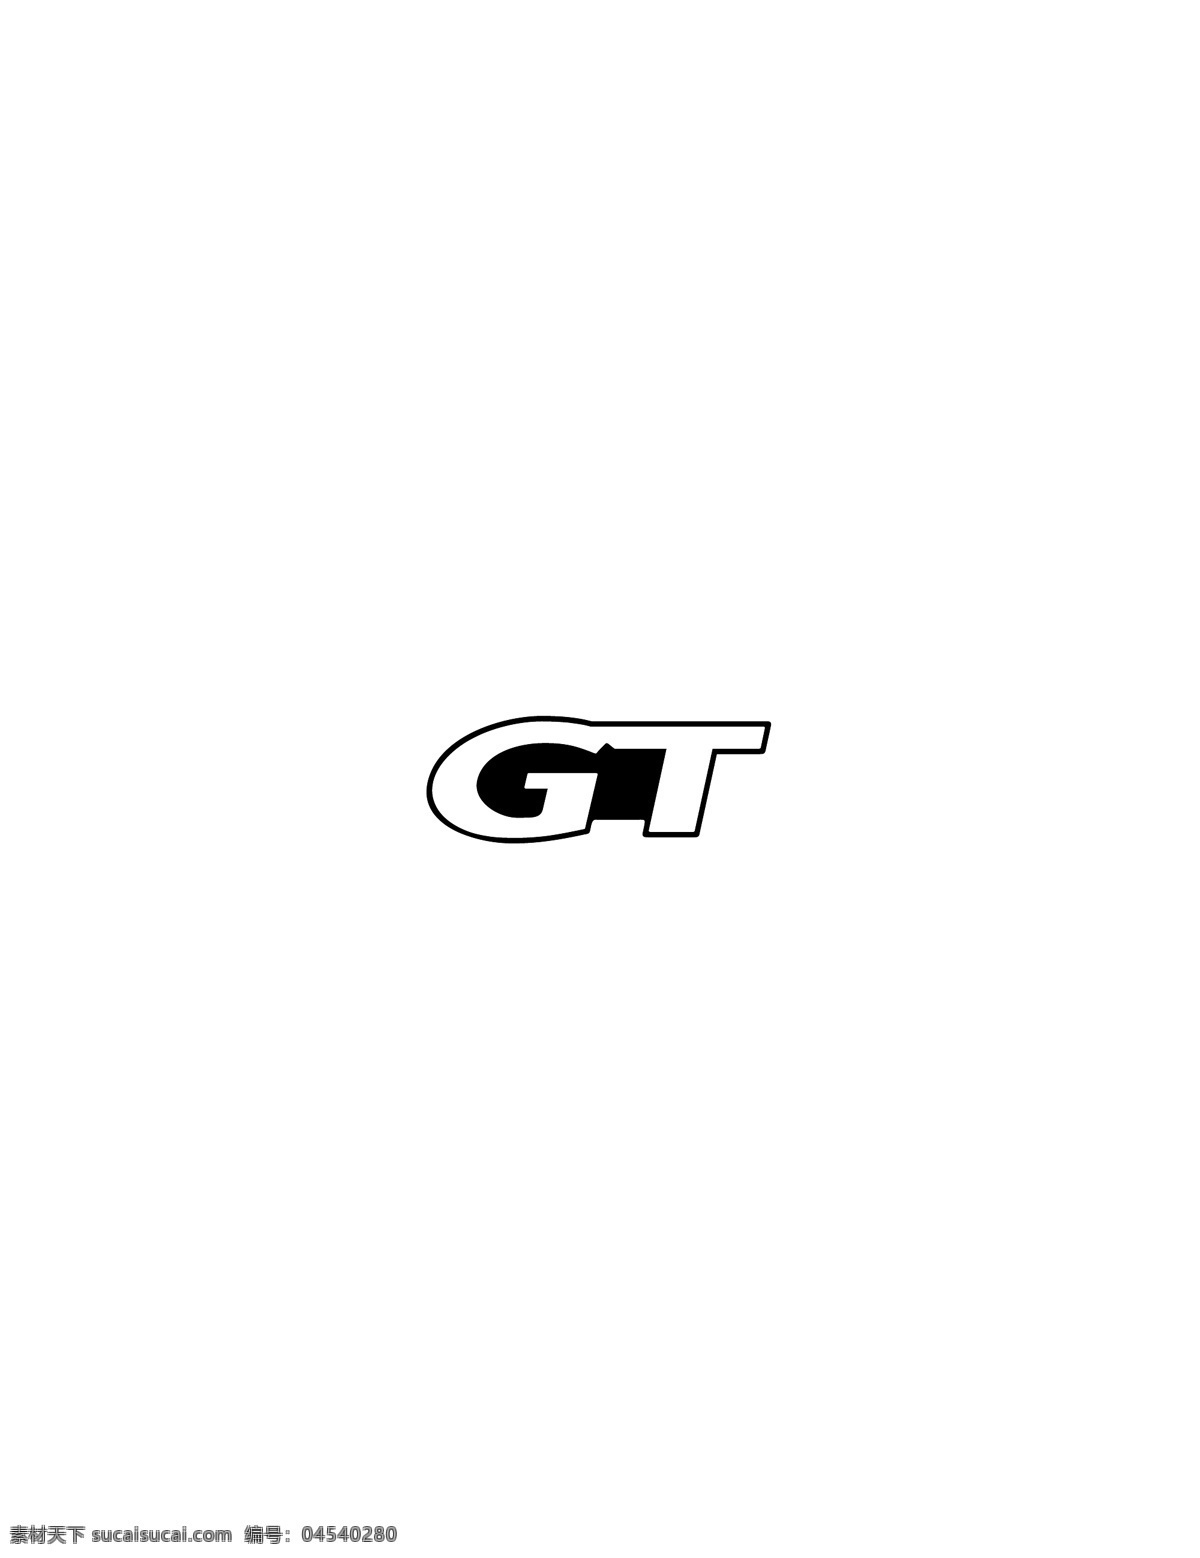 gt免费下载 logo大全 logo 设计欣赏 商业矢量 矢量下载 gt 矢量 名车 标志 标志设计 欣赏 网页矢量 矢量图 其他矢量图